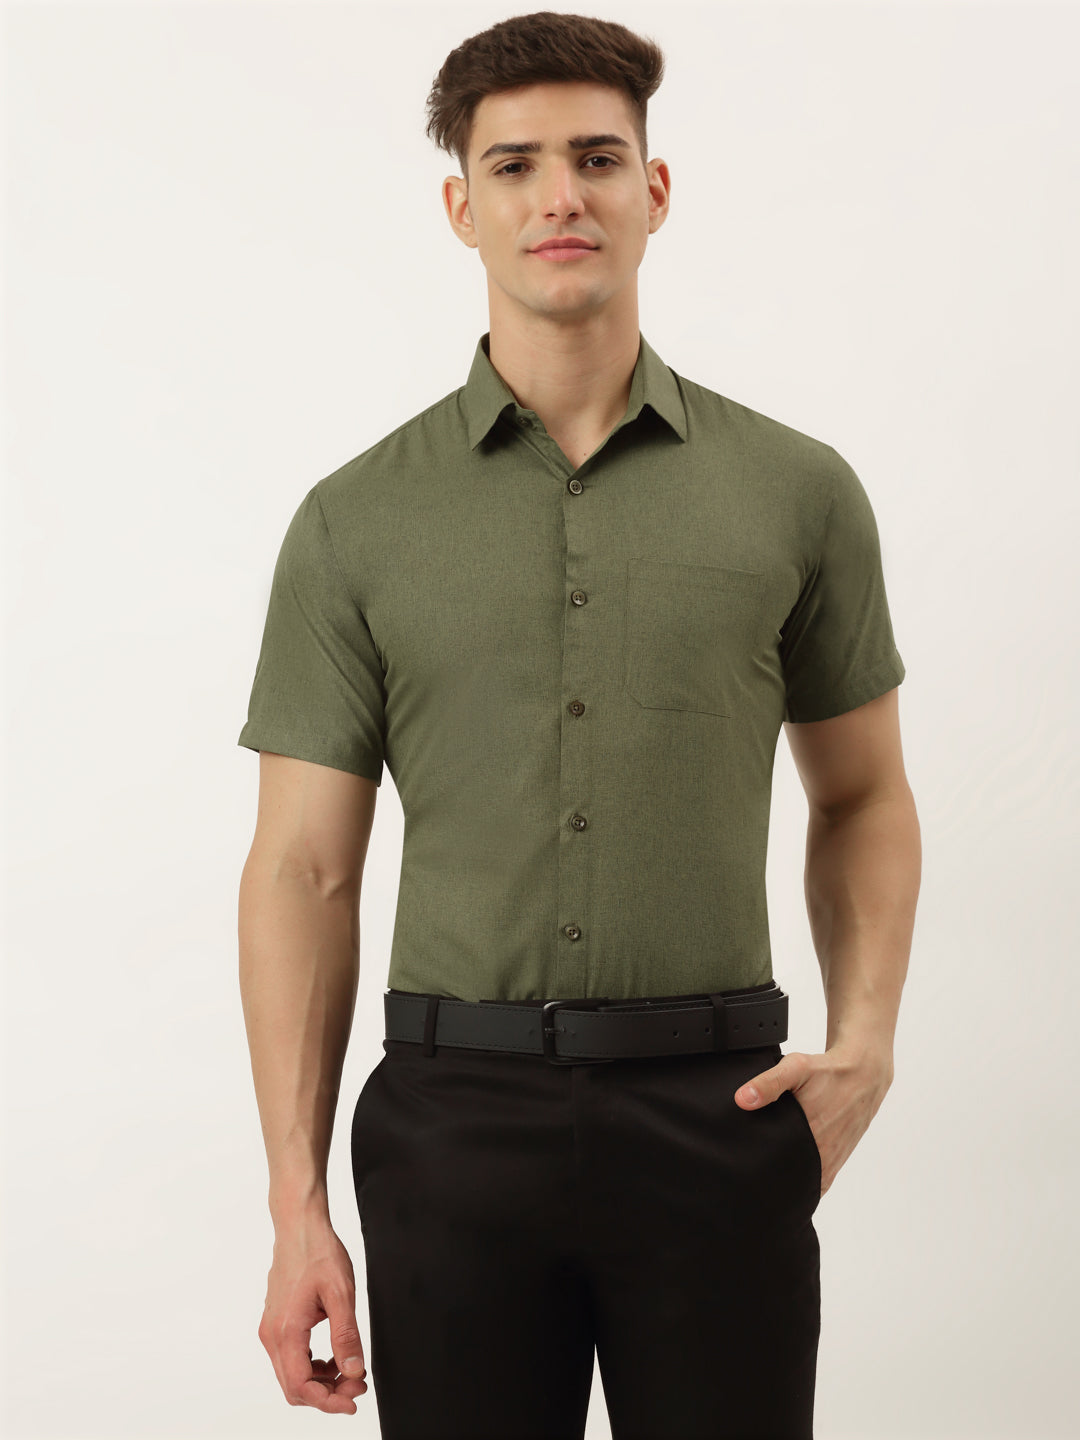 Men's Cotton Solid Half Sleeve Formal Shirts ( SF 811Olive ) - Jainish